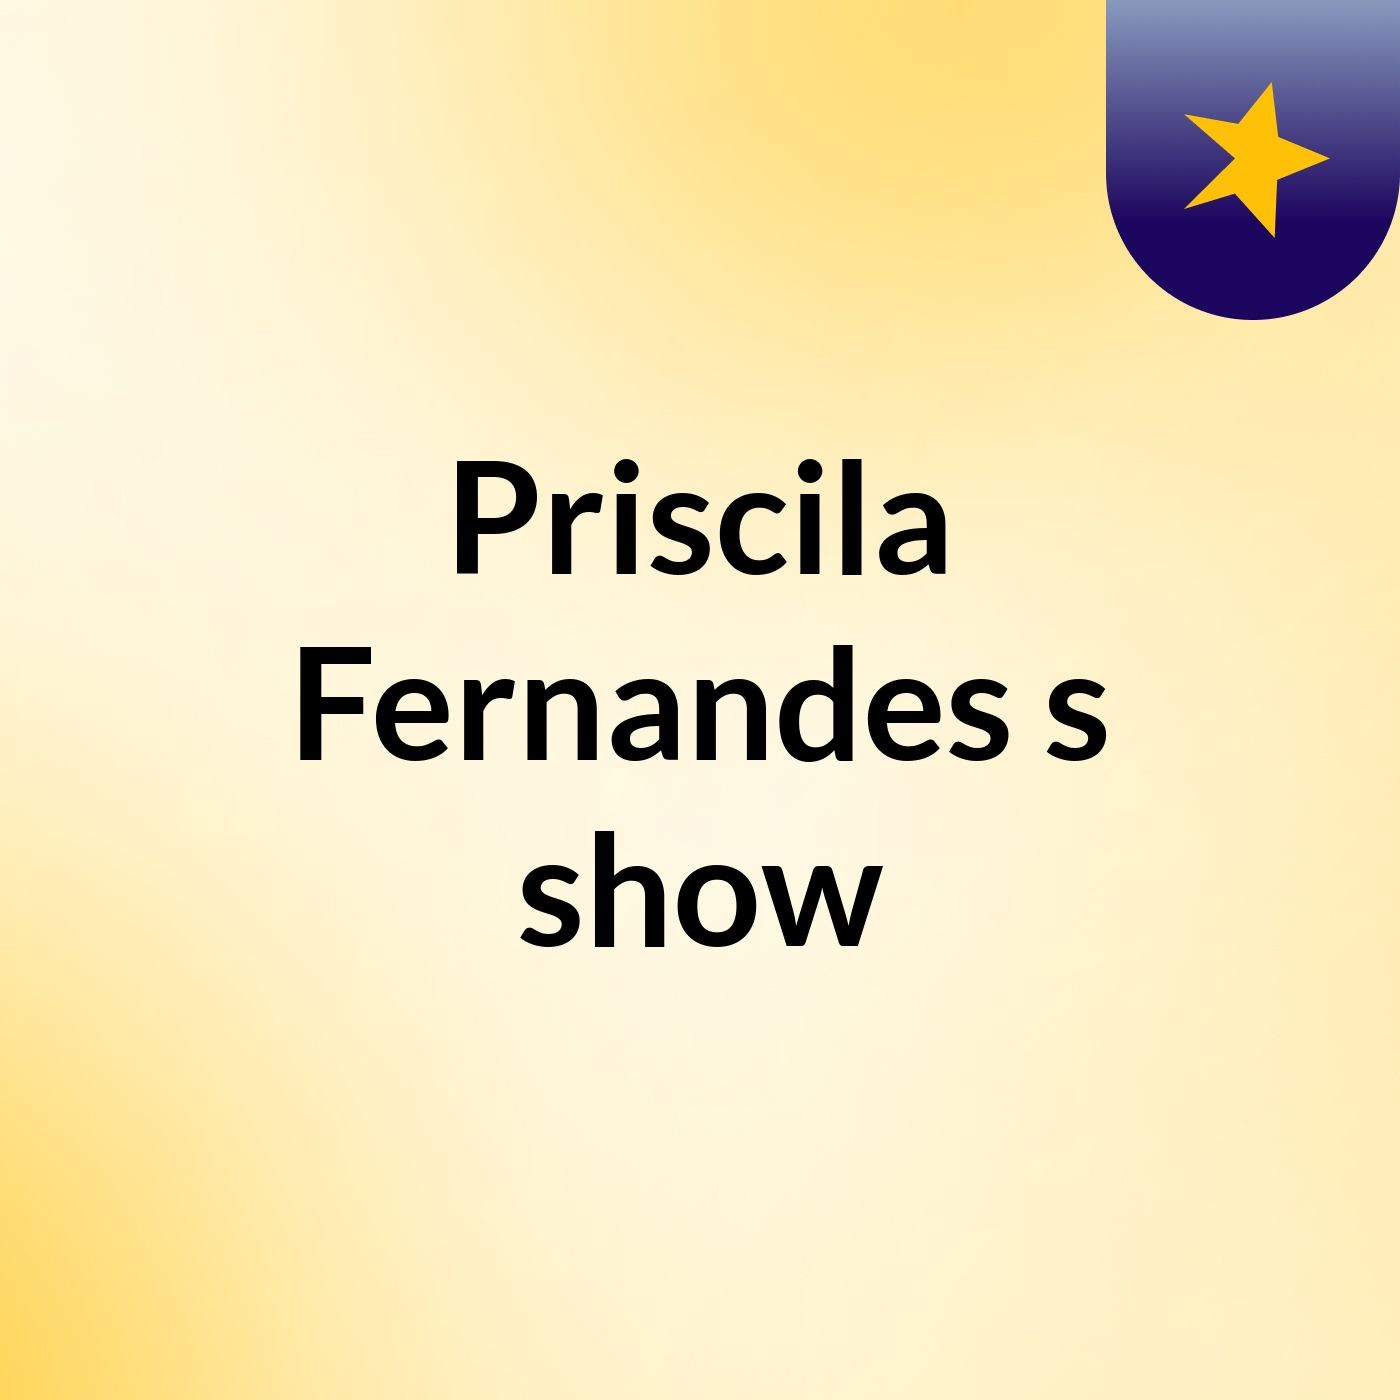 Priscila Fernandes's show